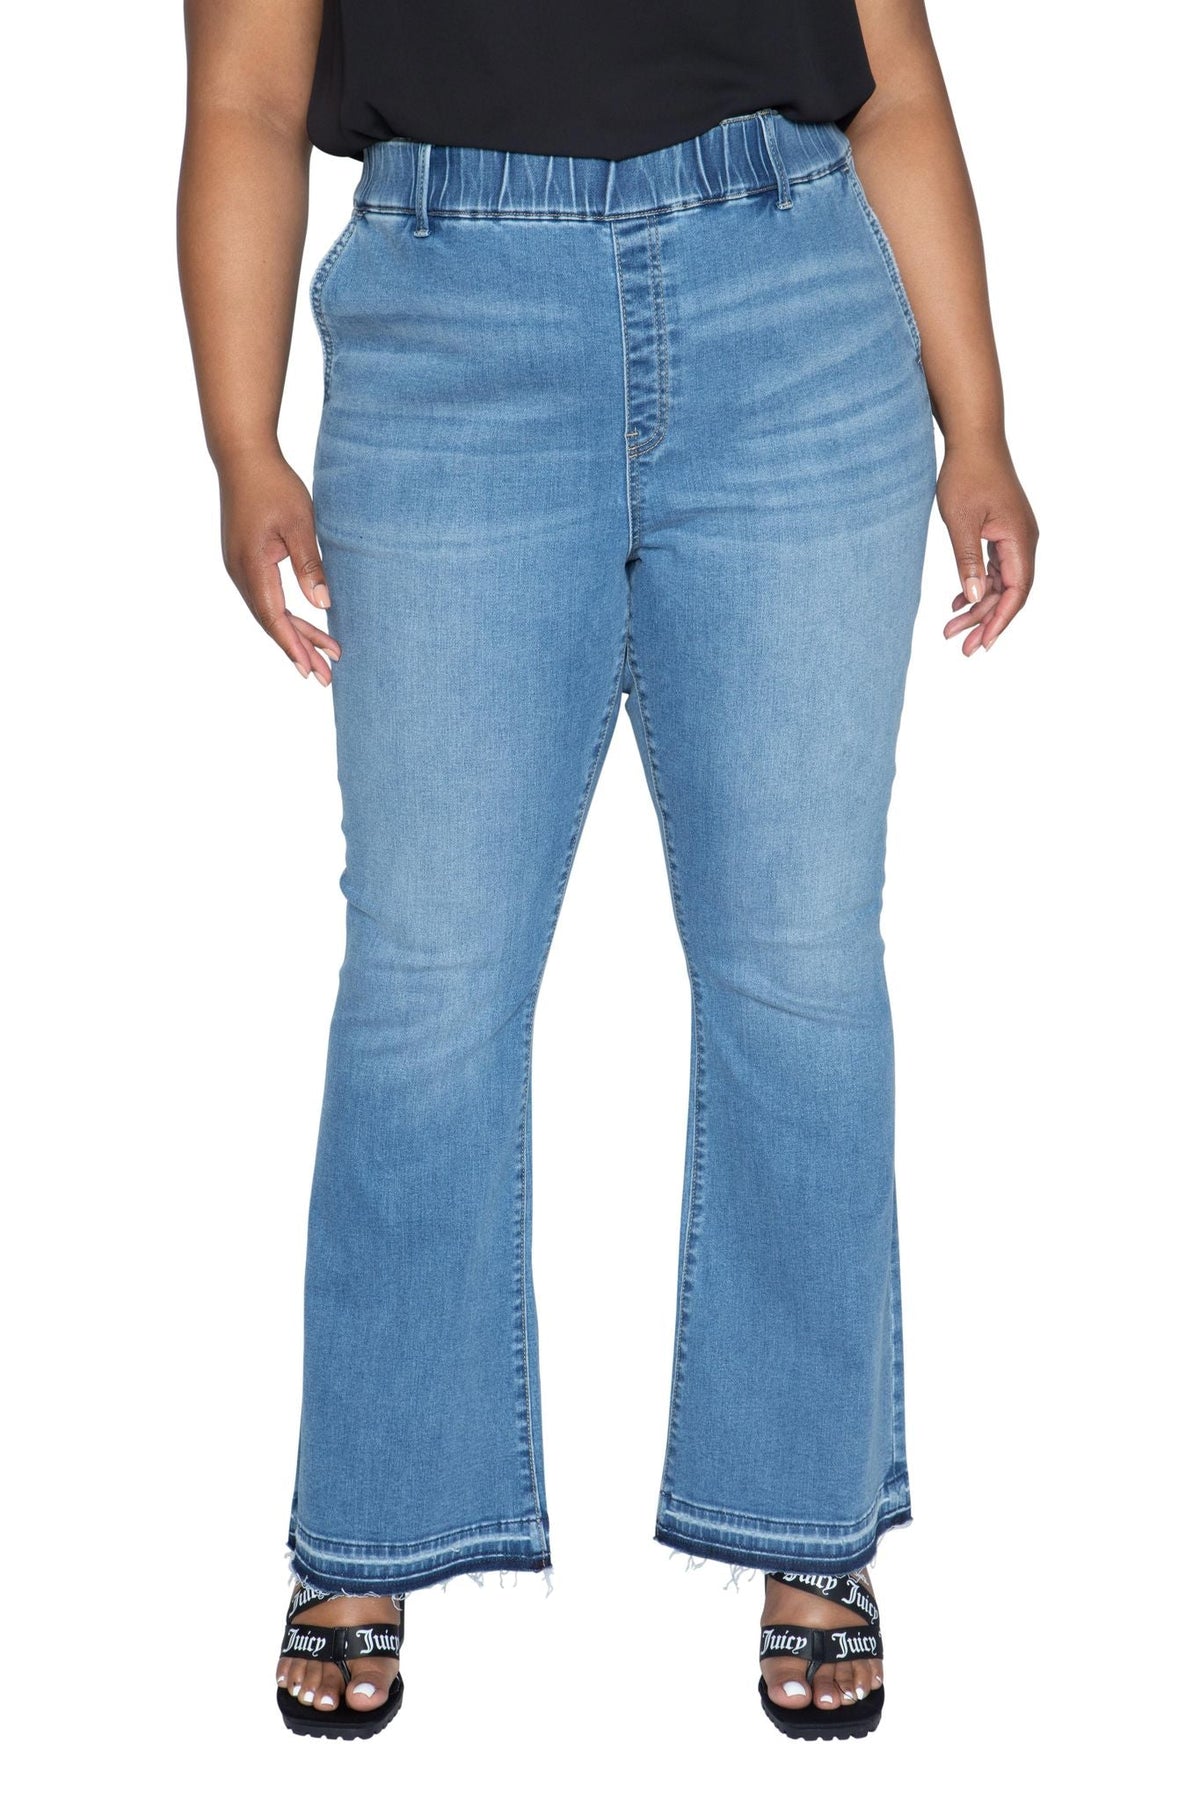 Juicy Couture Plus-Size Malibu Flare Pull On Jeans Medium Wash